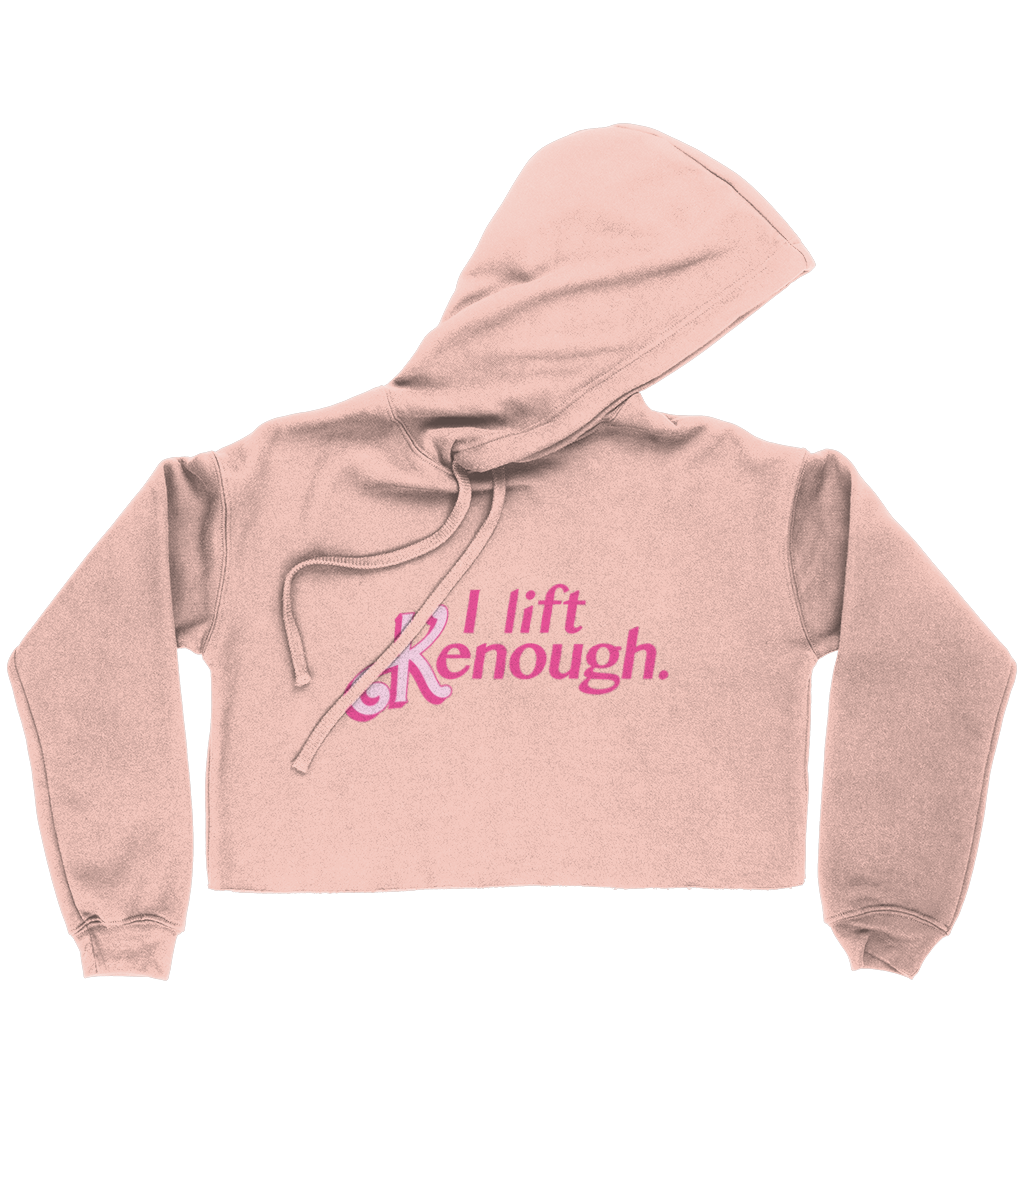 Lift kenough cropped hoodie